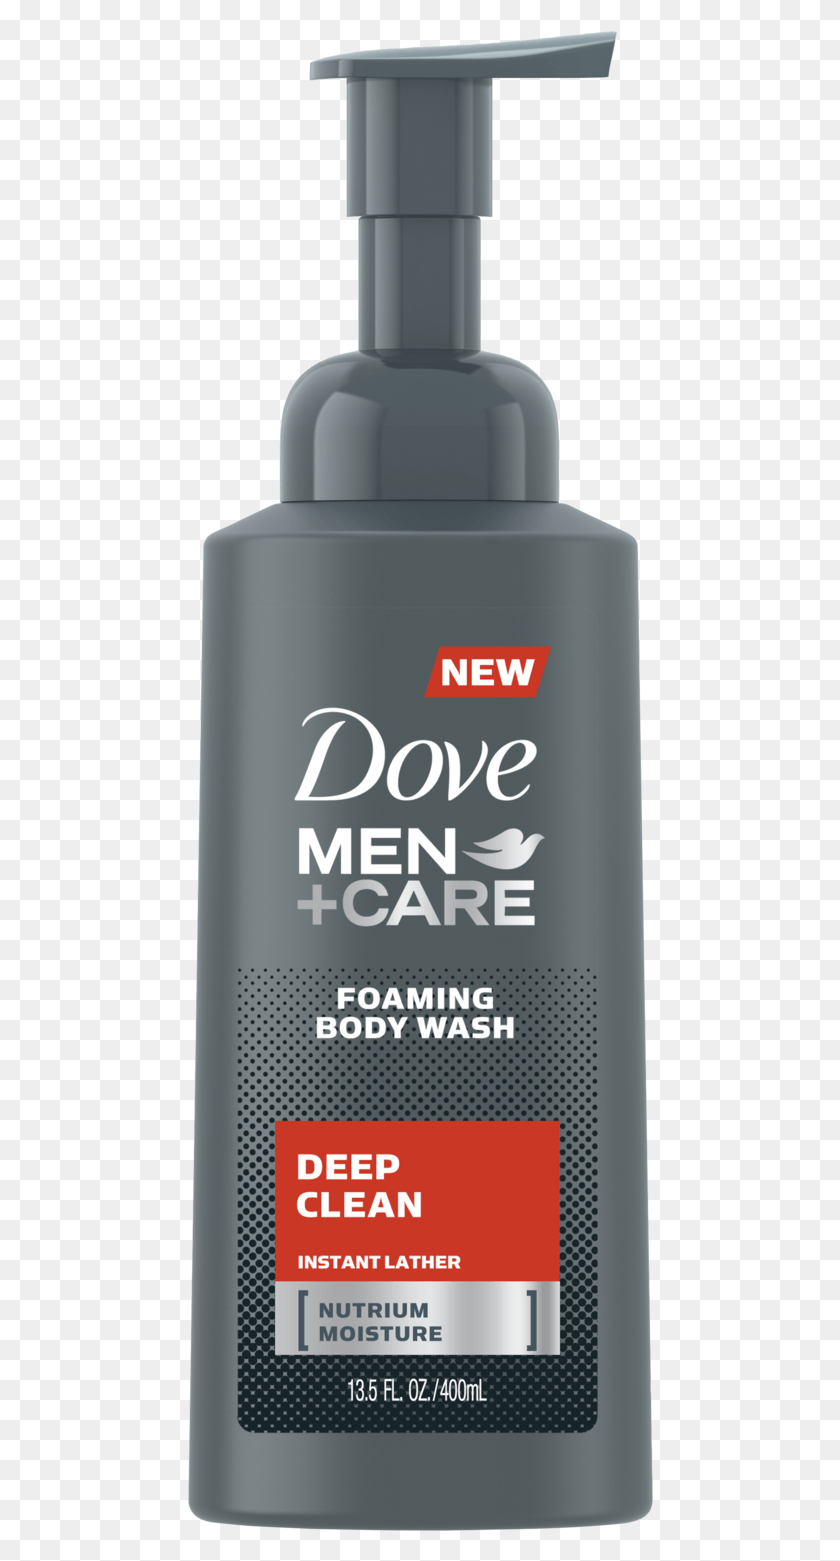 468x1501 Dove Men Body Wash Deep Clean, Олово, Алюминий, Банка Hd Png Скачать